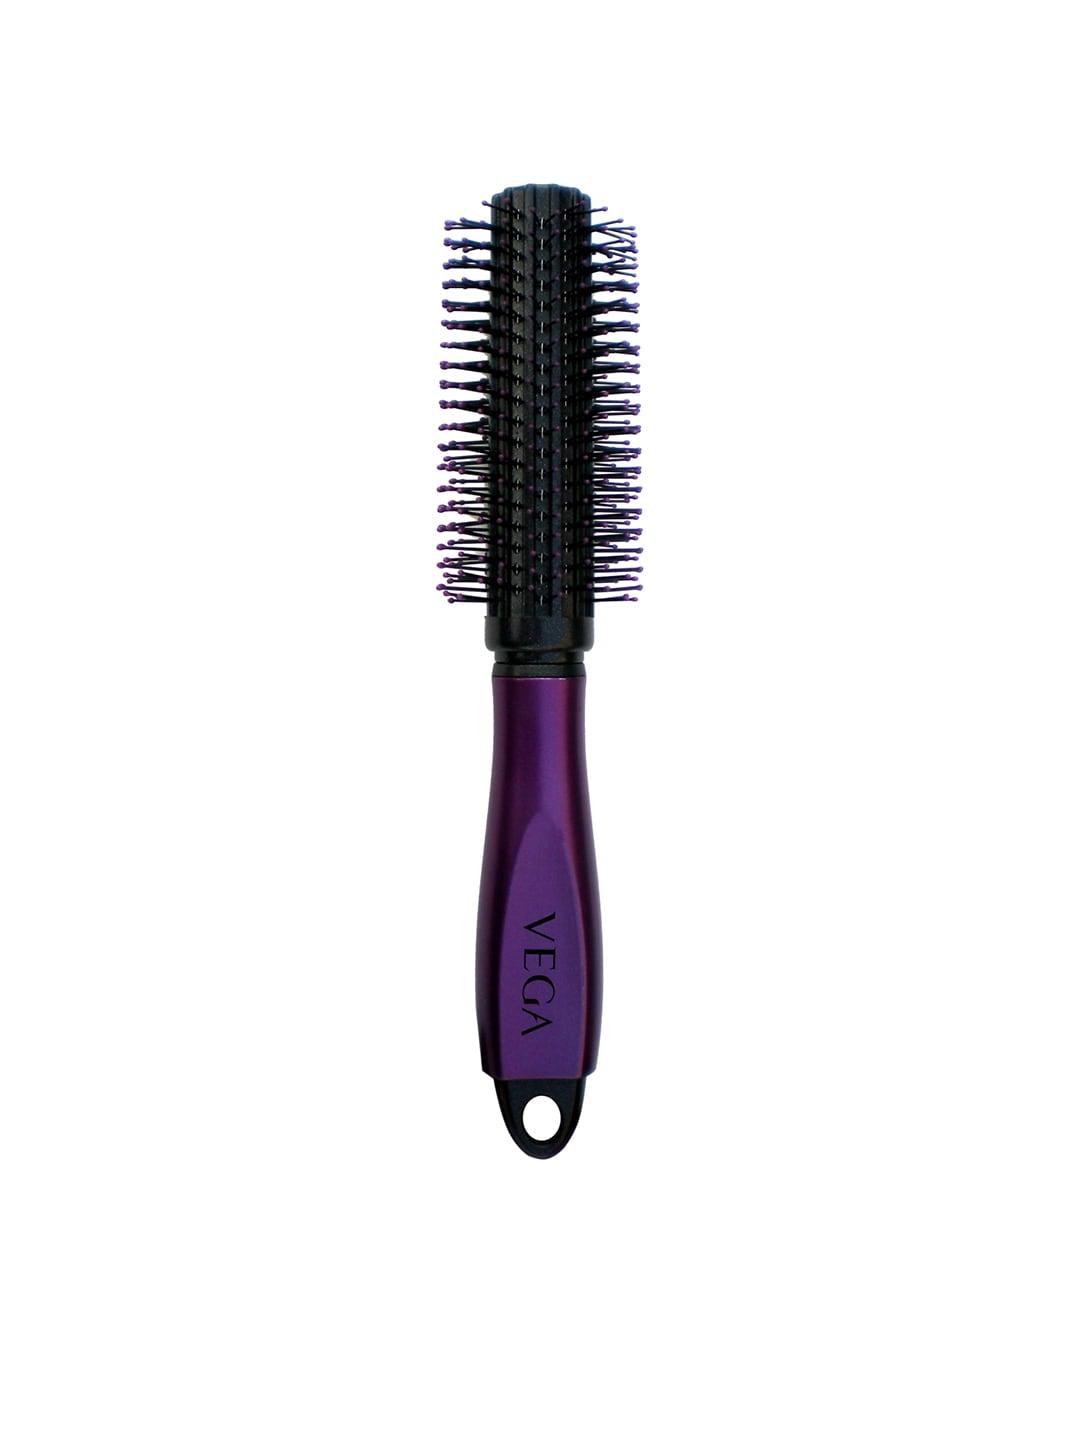 vega unisex black & purple round hair brush with cleaner e18-rb